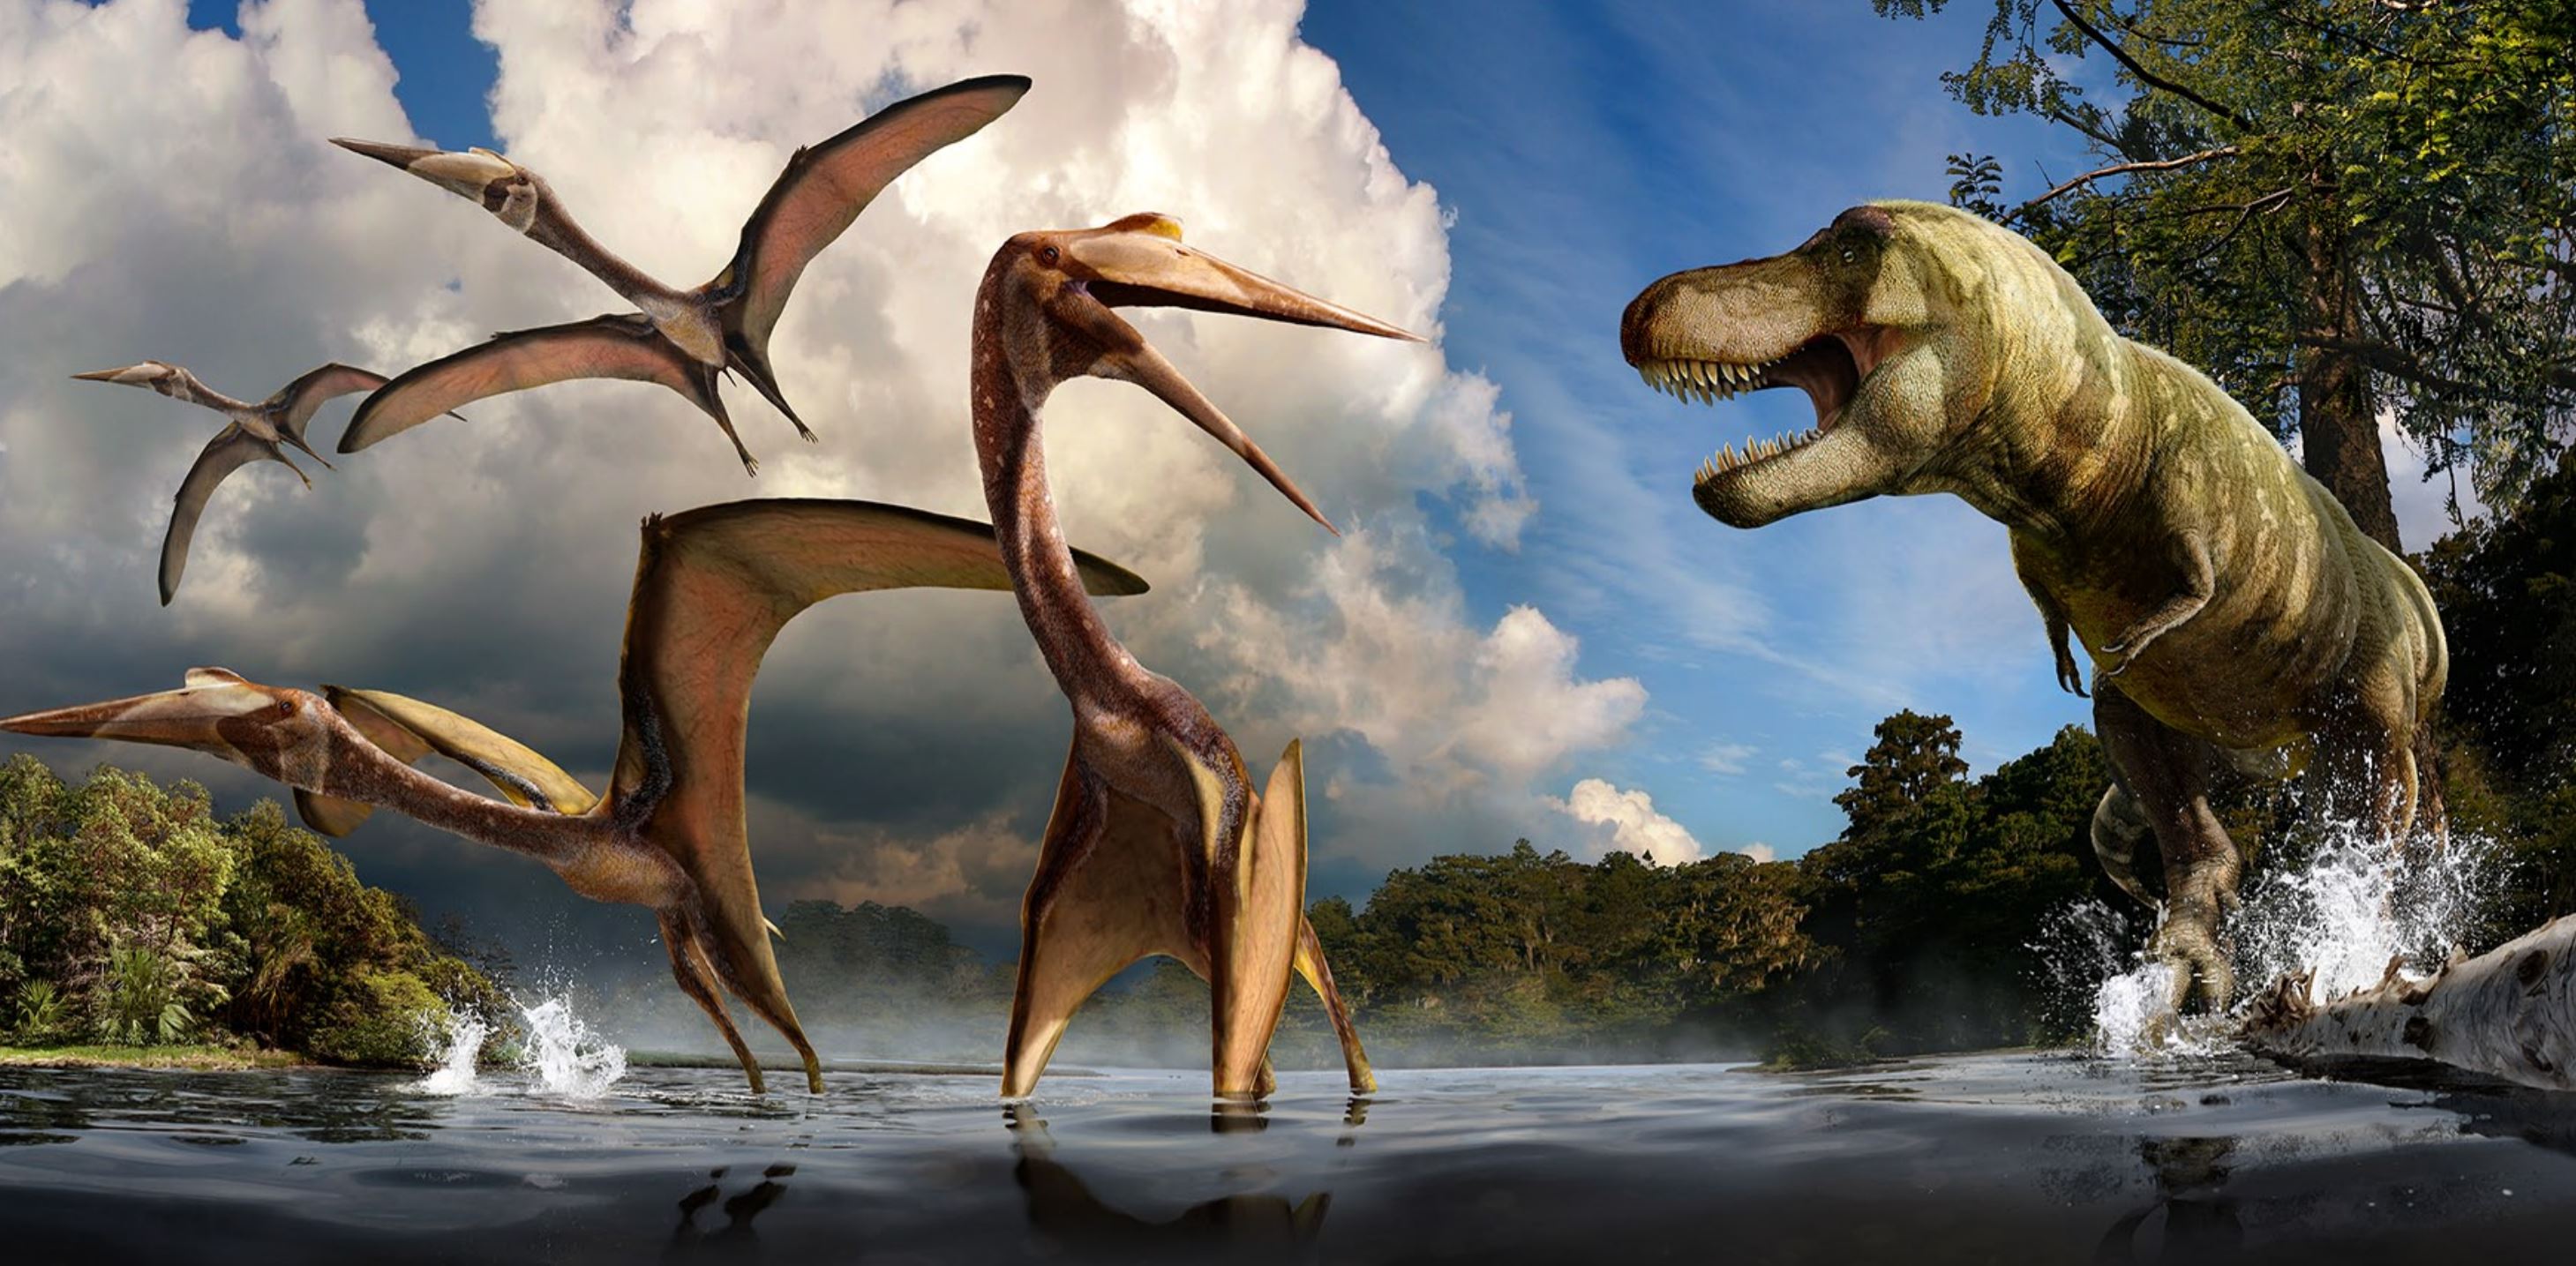 Cretaceous Dinosaurs - Fossils and Paleontology (. National Park Service)